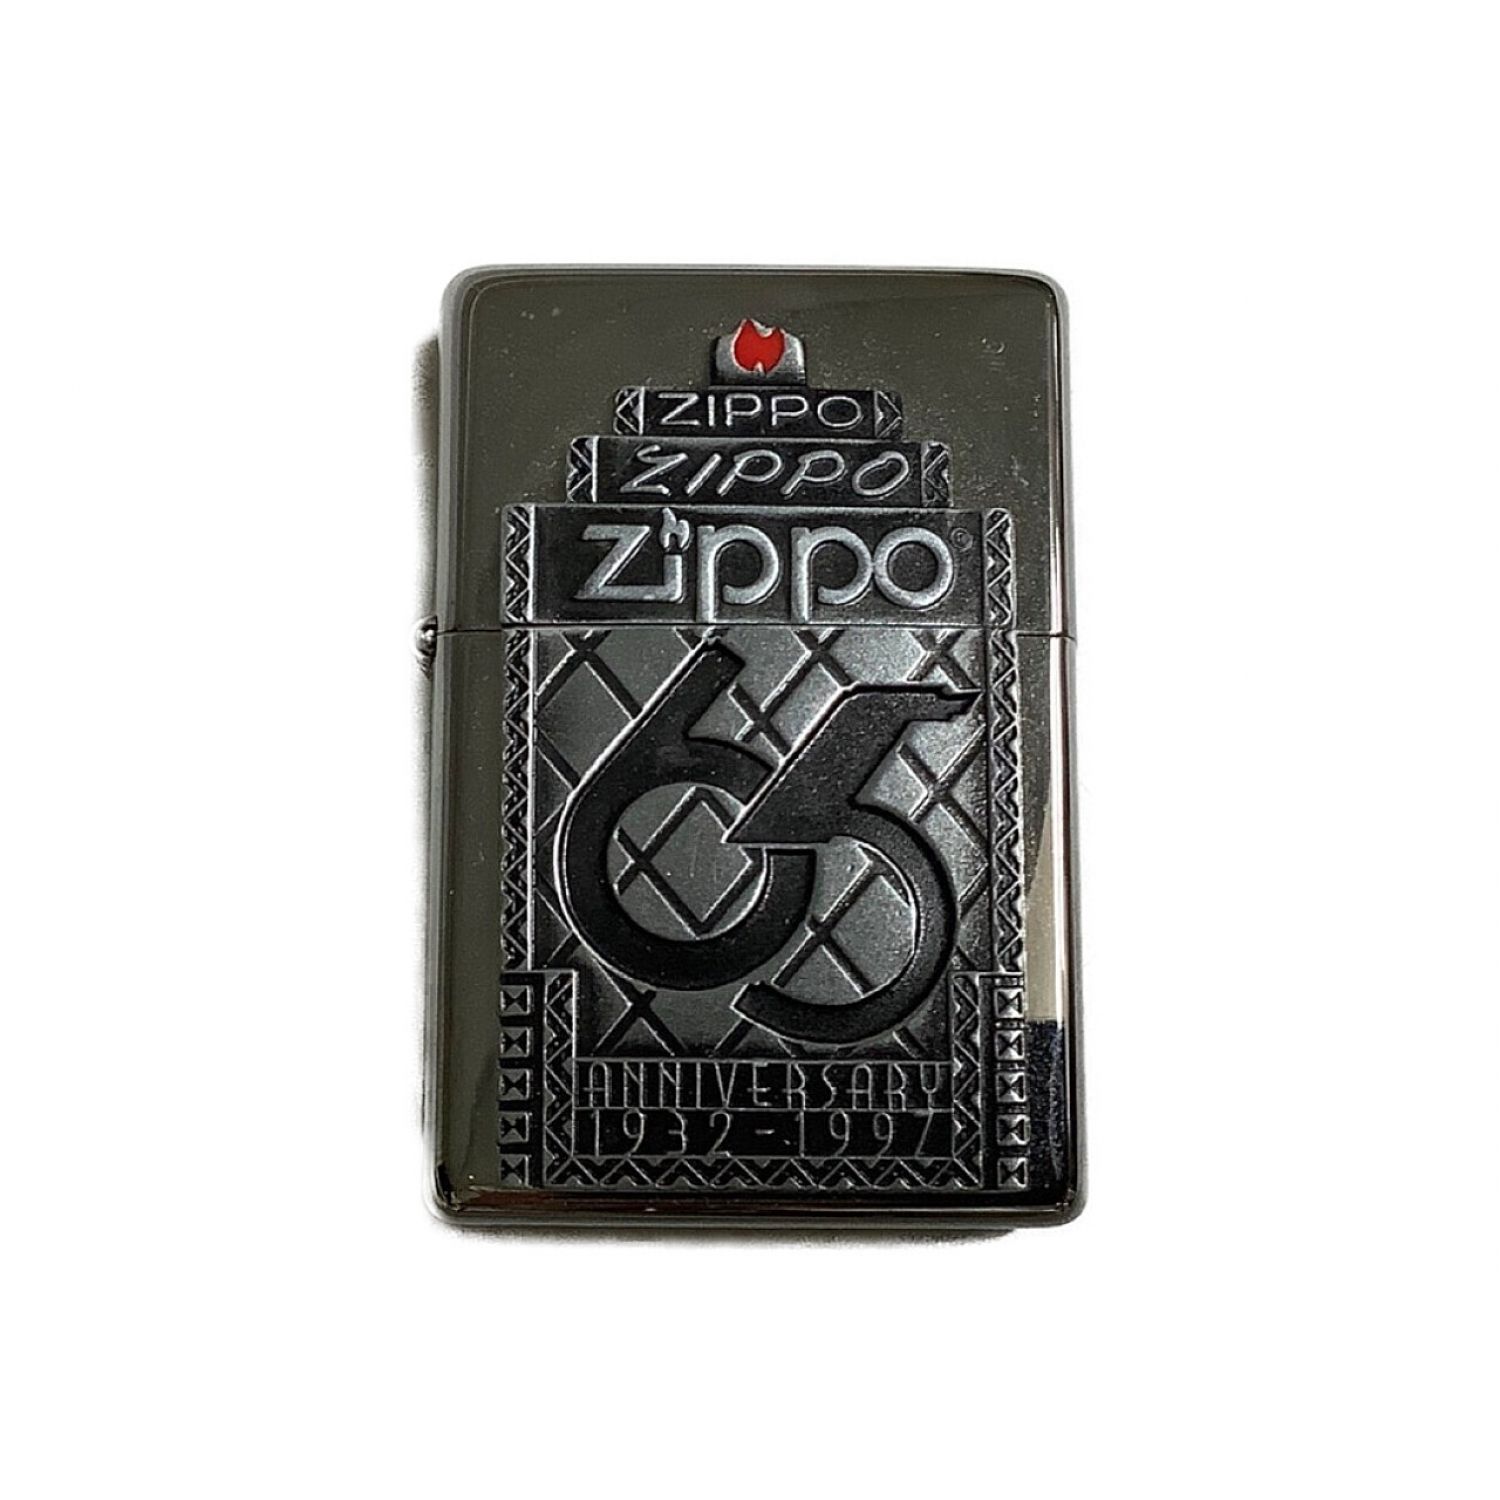 ZIPPO (ジッポ) ZIPPO 65周年記念モデル 2015年8月製造 未使用品 ...